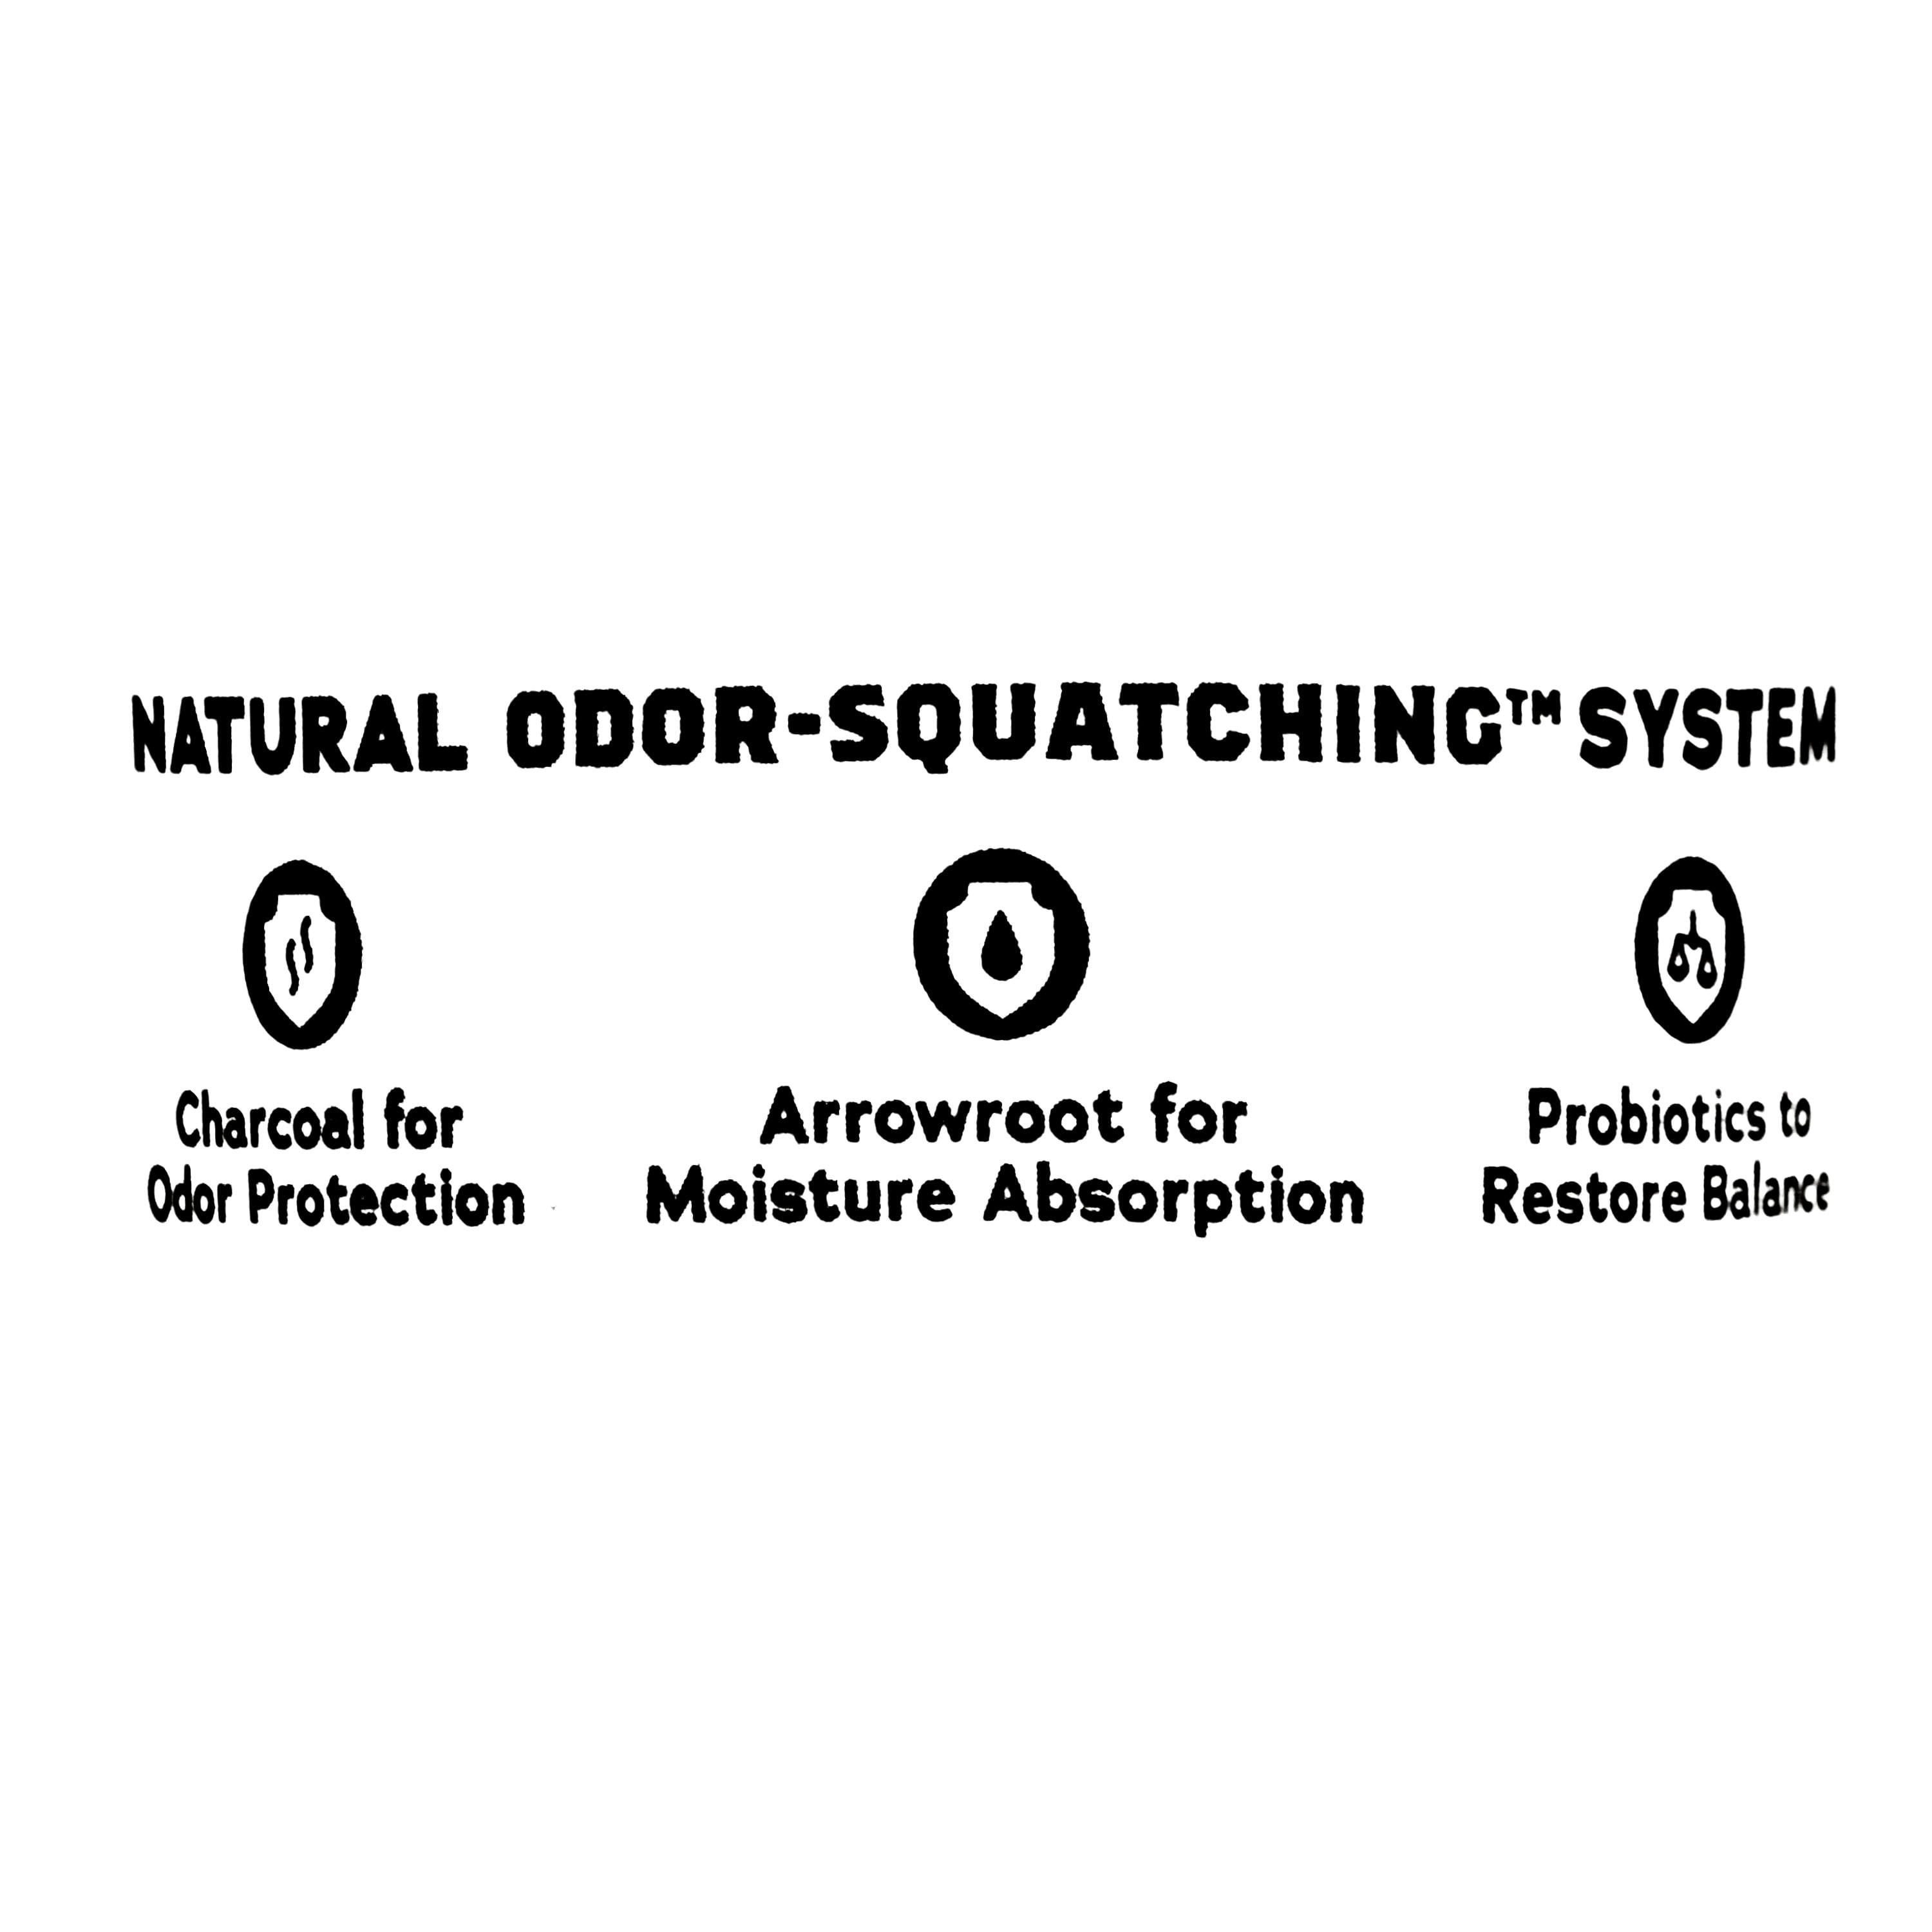 Dr. Squatch® Pine Tar Natural Deodorant, 2.65 oz - Kroger